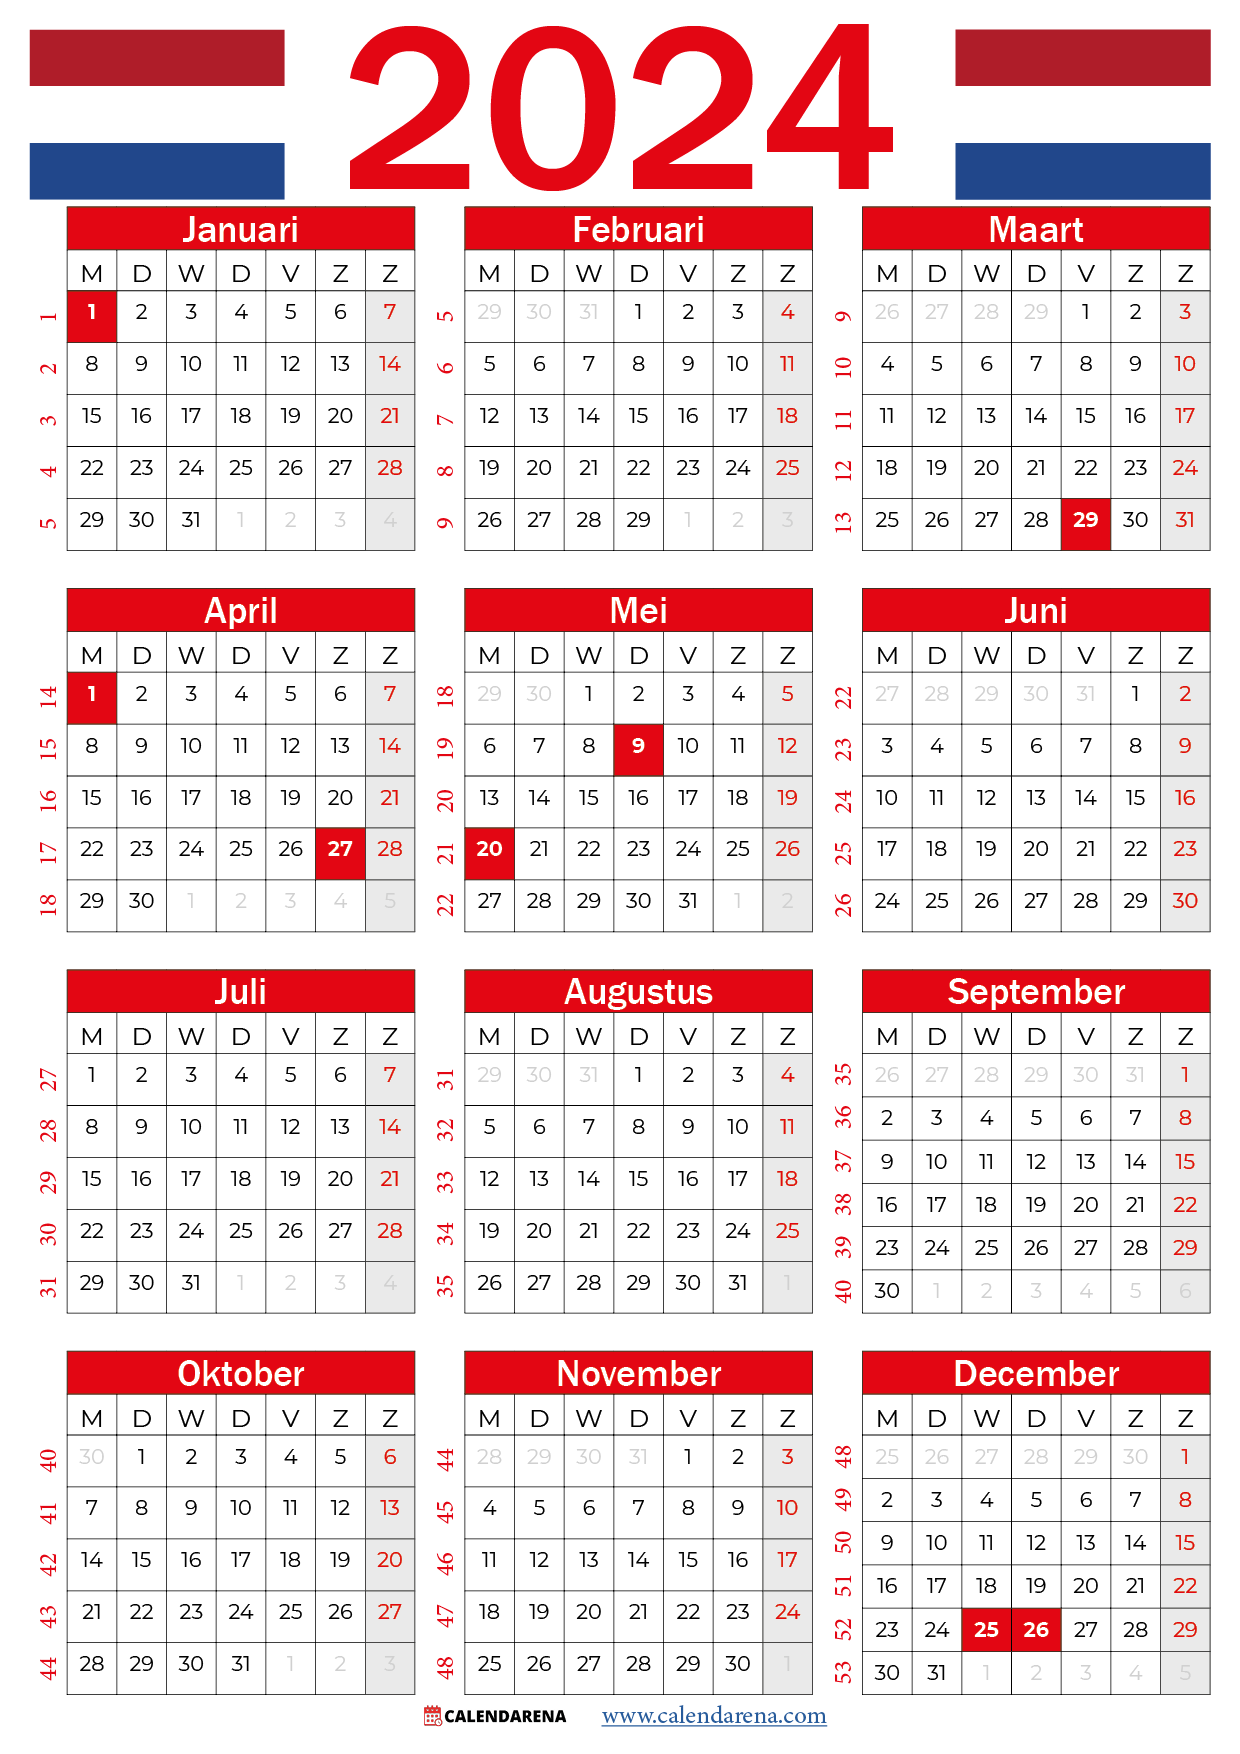 kalender weeknummers 2024 Nederland